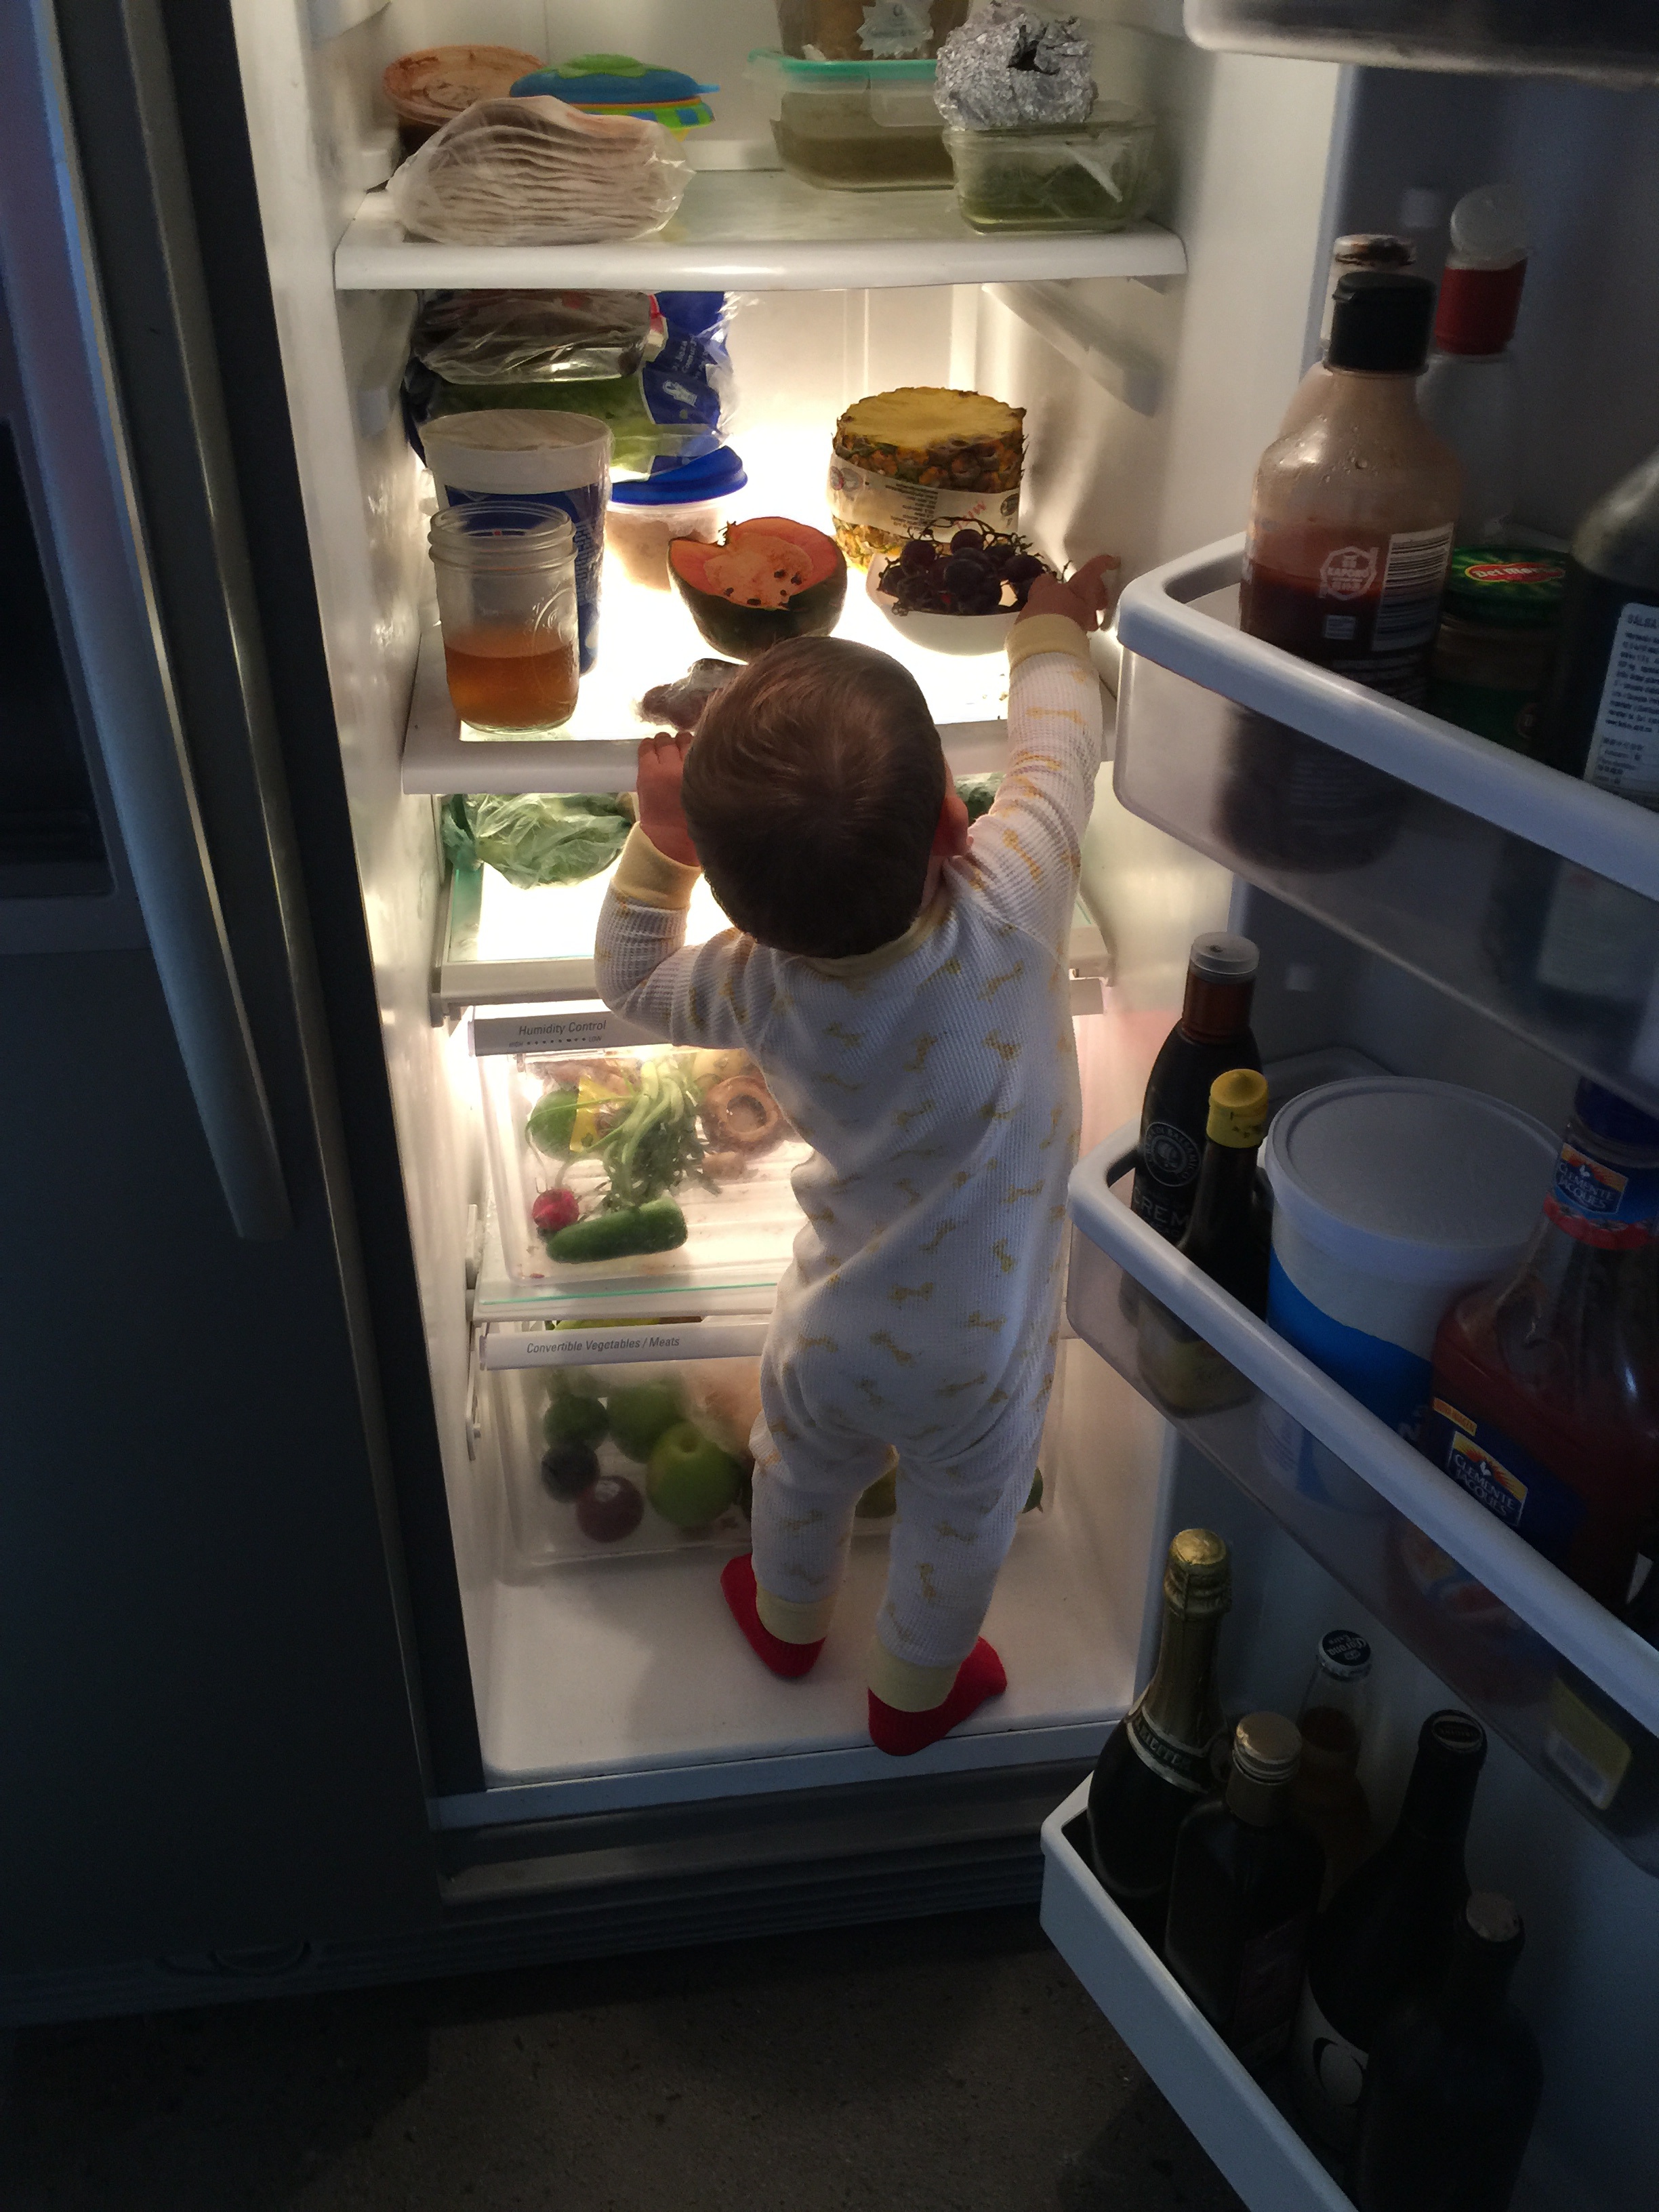 BFB211023 Child and Refrigerator